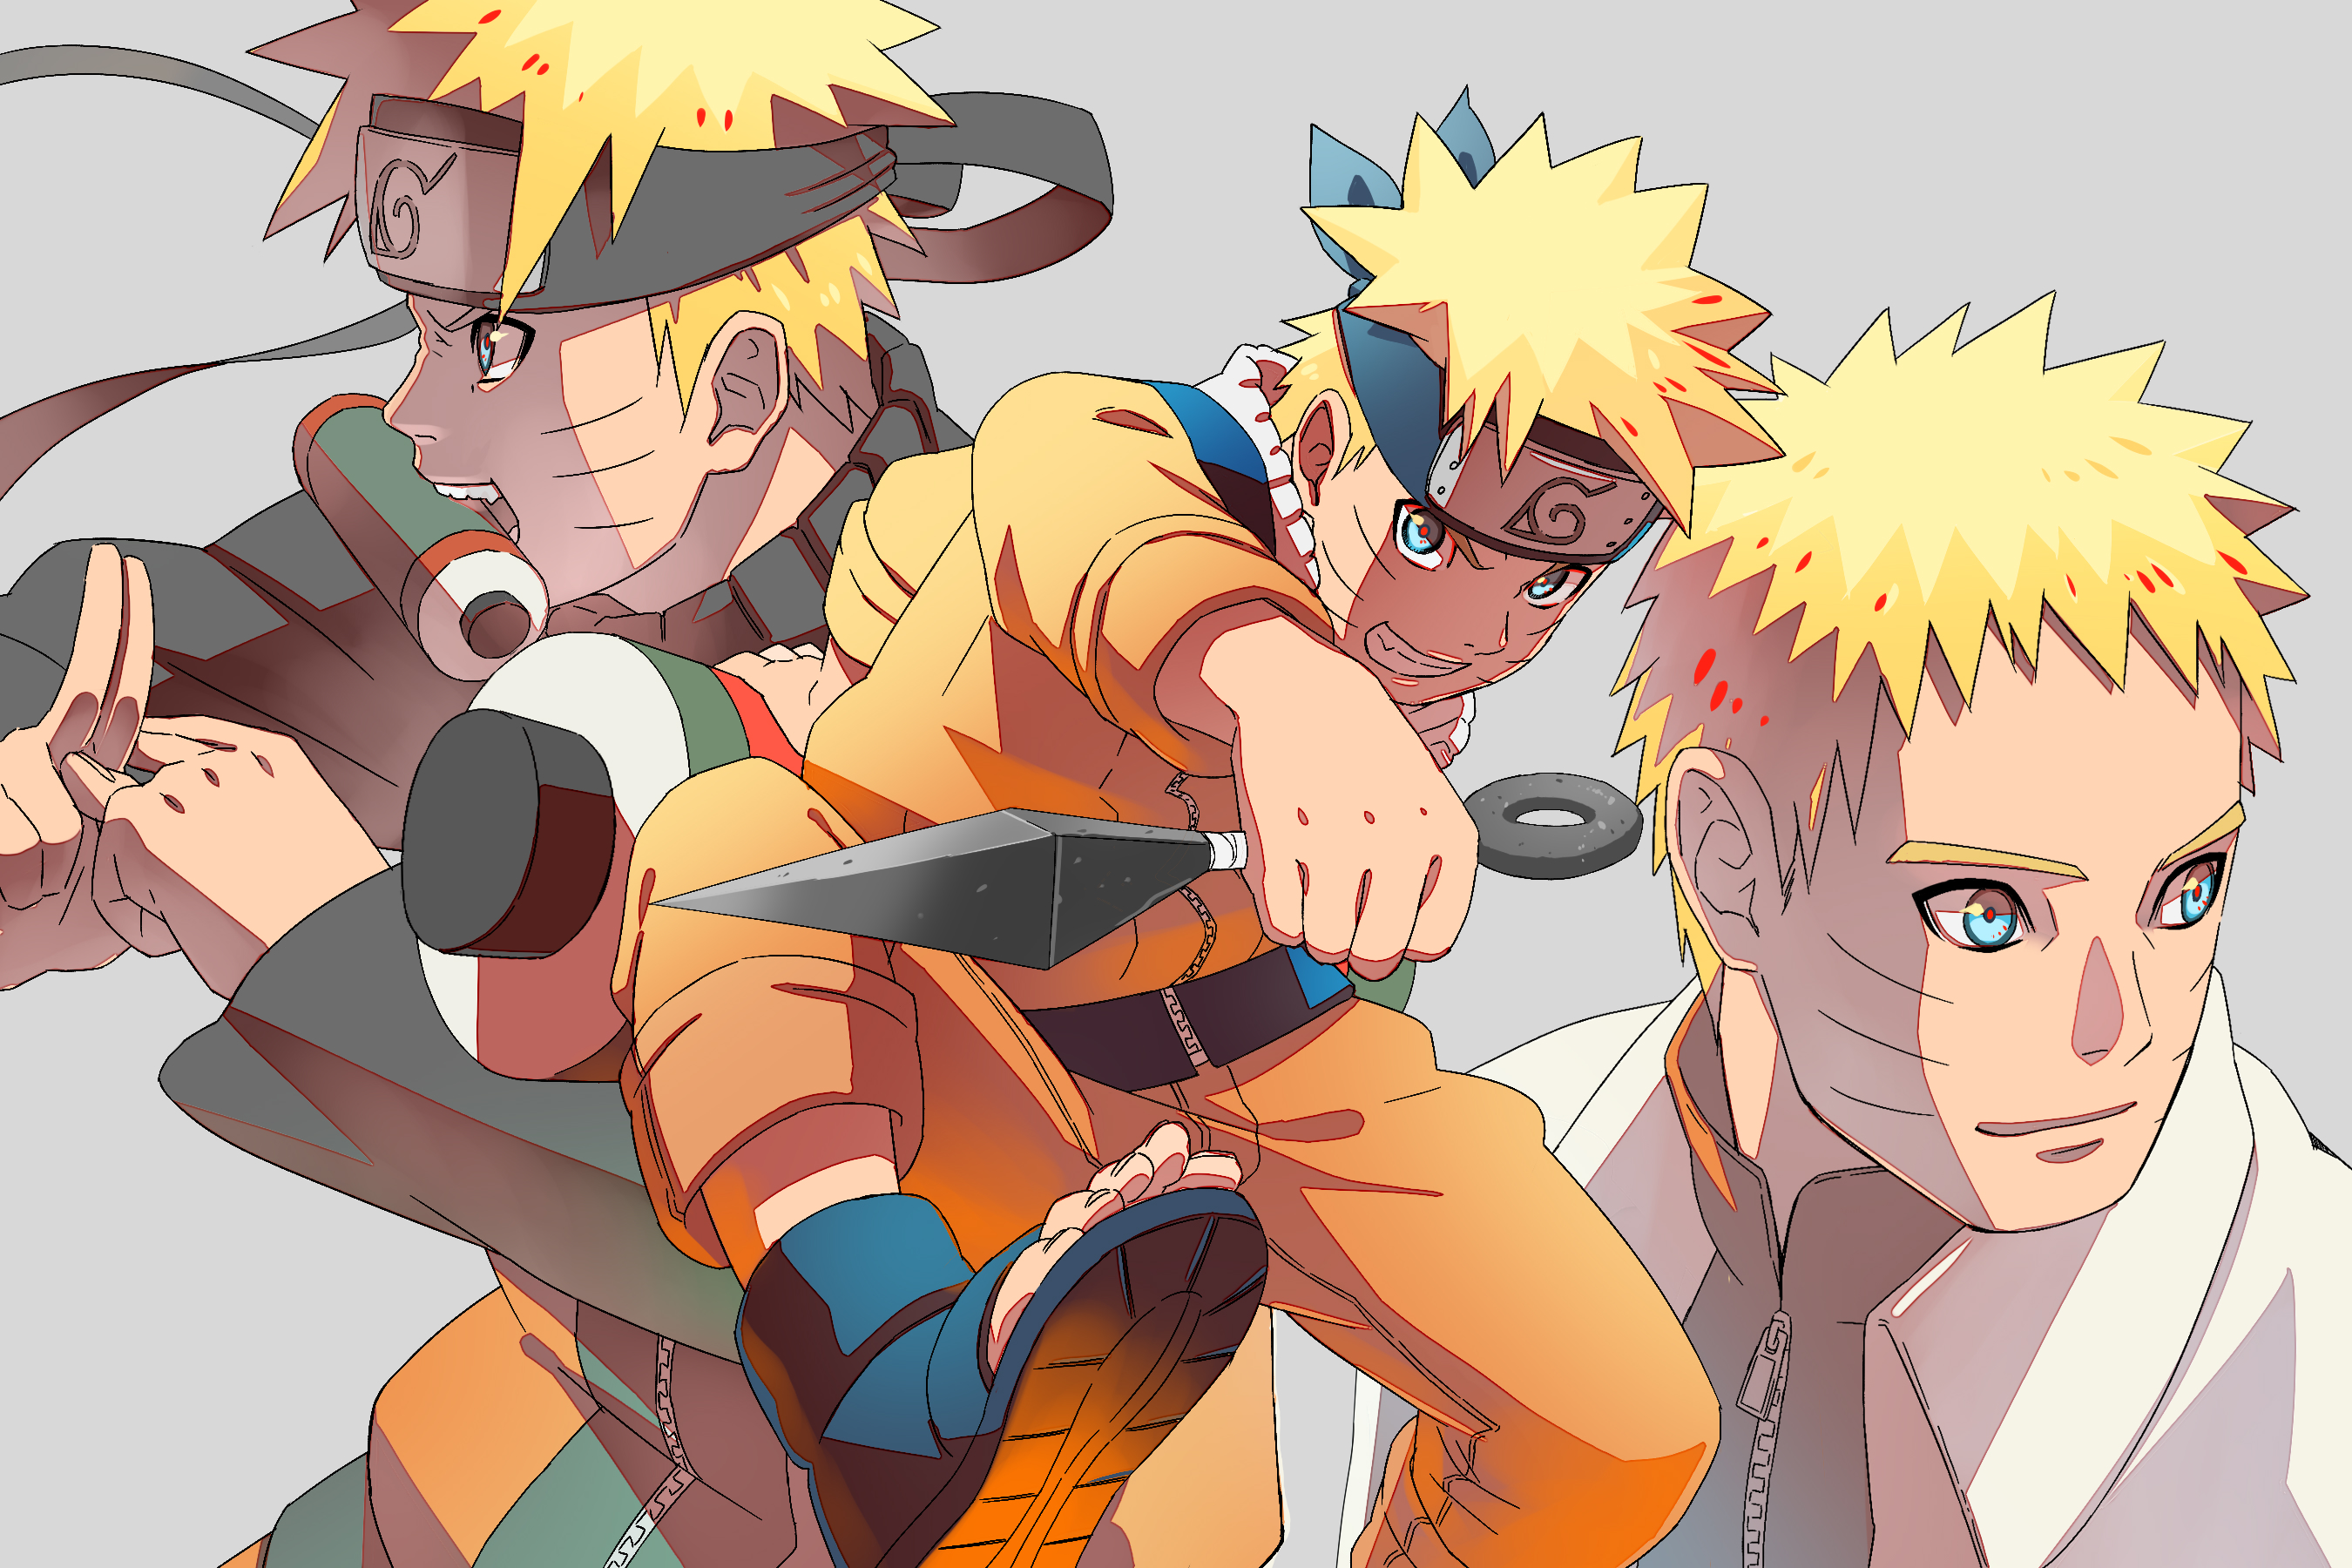 Descarga gratis la imagen Naruto, Animado, Naruto Uzumaki, Hokage (Naruto) en el escritorio de tu PC